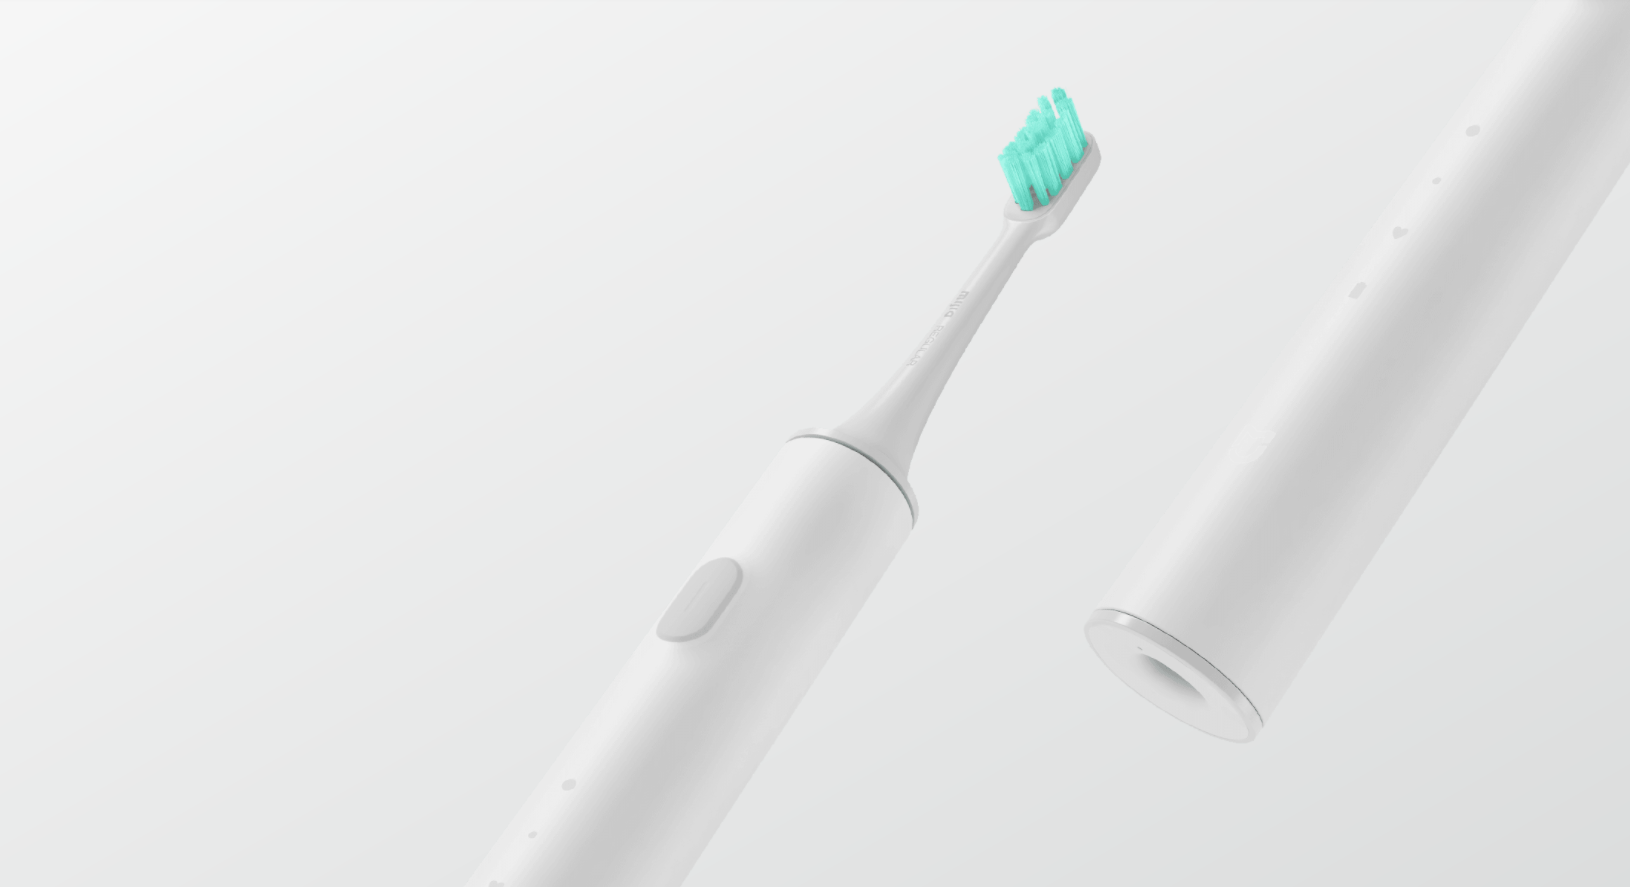 Mijia sonic toothbrush. Электрическая зубная щетка Xiaomi t500. Электрическая зубная щетка Xiaomi t500, белый. Щетка Xiaomi t500 Blue. Xiaomi Mijia зубная щетка.